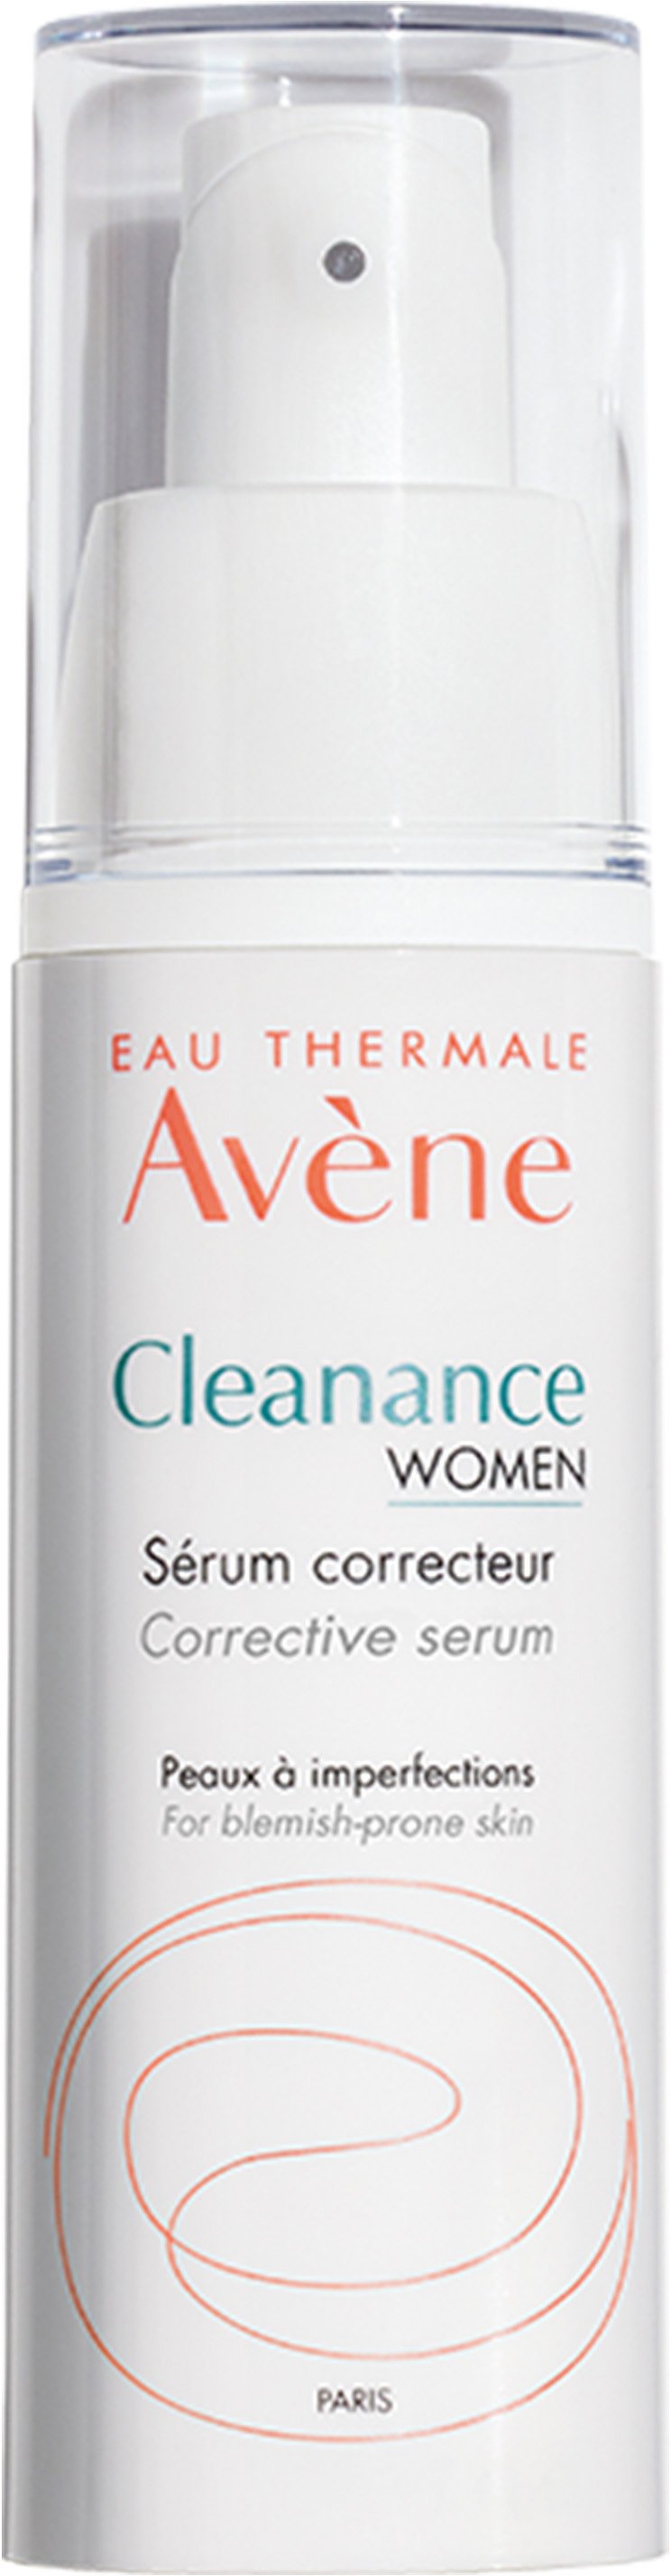 Avène Cleanance Women Corrective Serum 30 ml